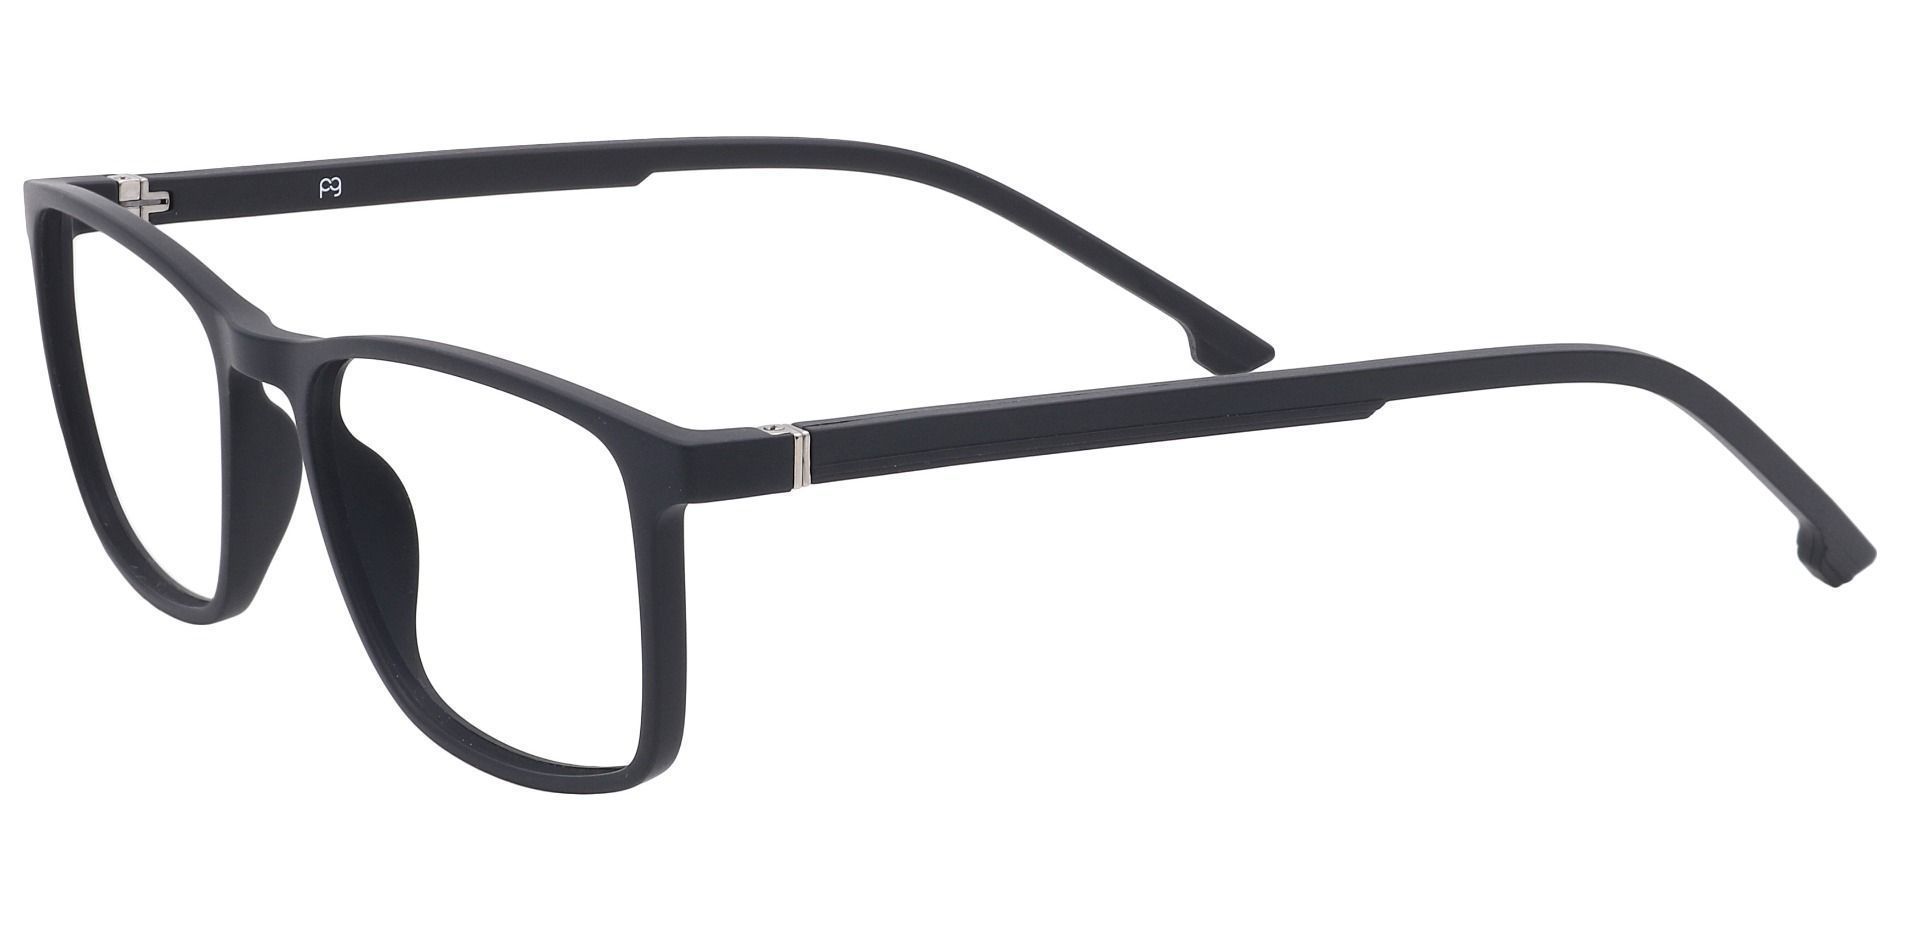 Franklin Rectangle Progressive Glasses -   Matte Black  